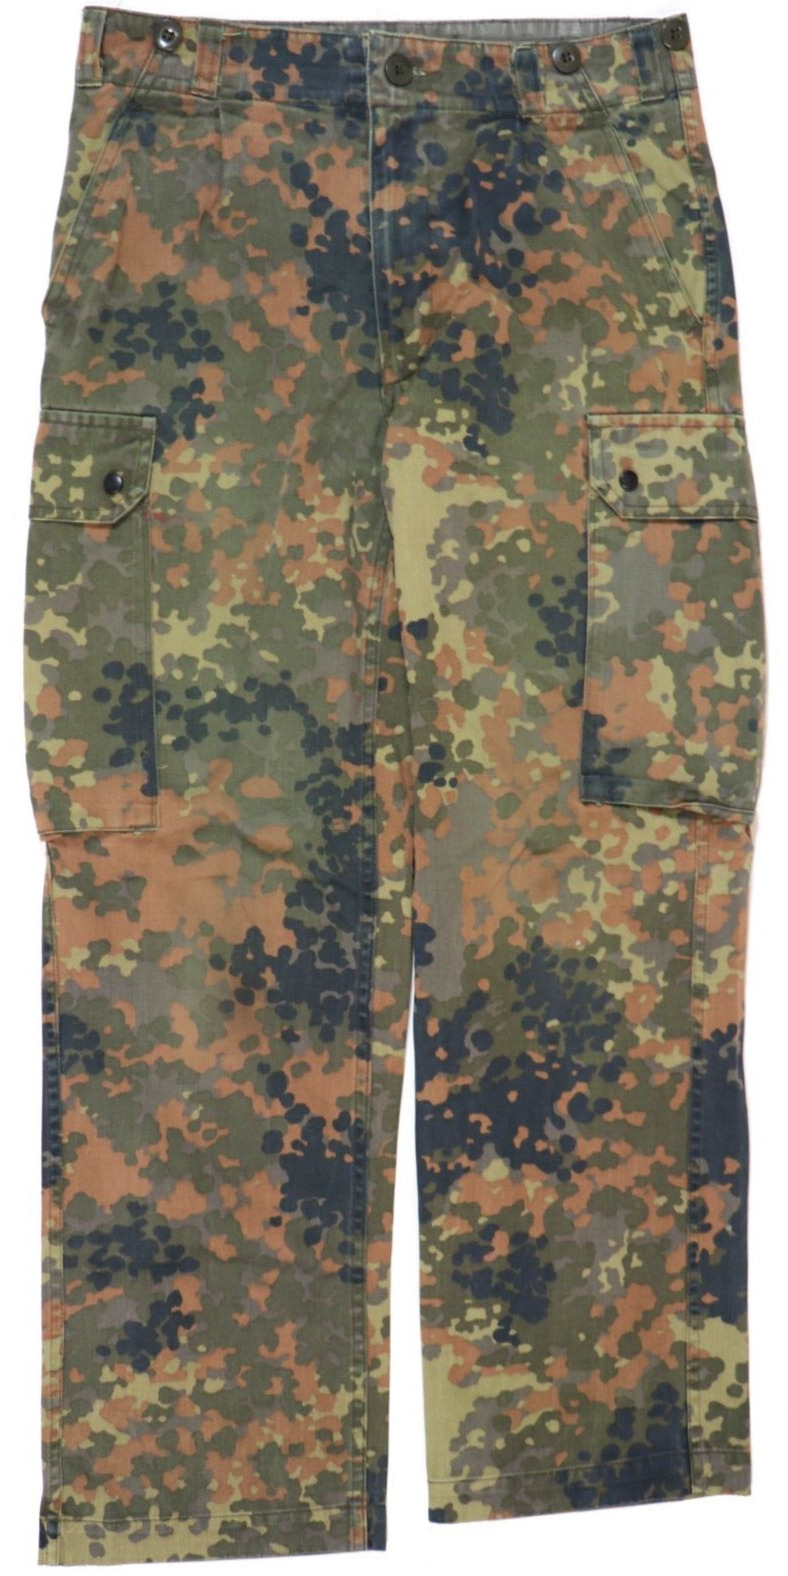 German Bundeswehr Flecktarn Military Pants Trousers Camo Army Camouflage